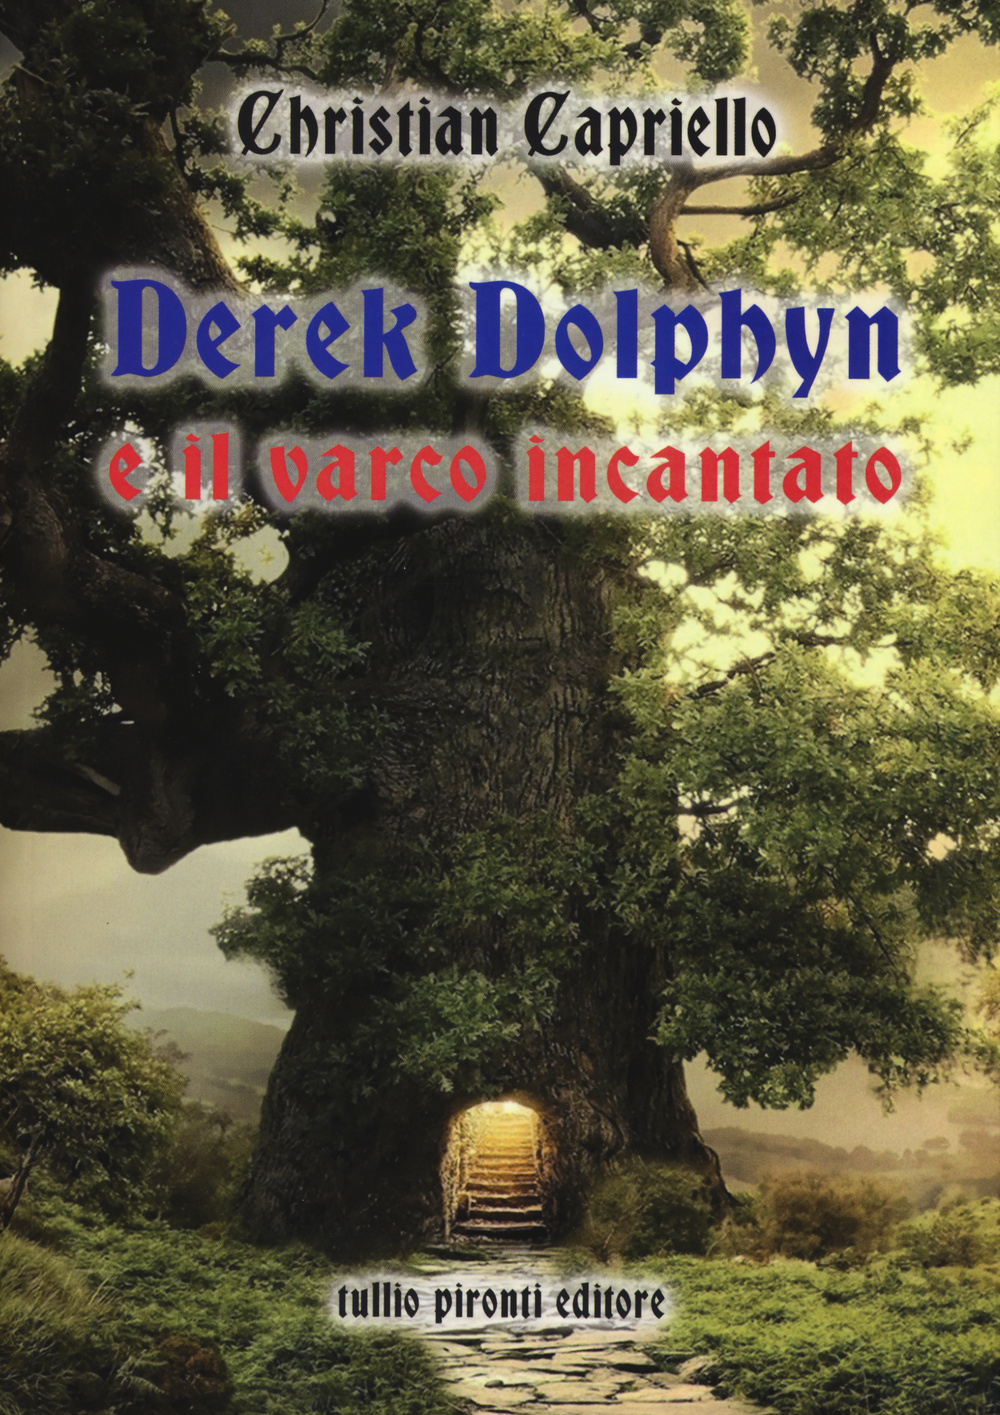 Derek Dolphyn e il varco incantato